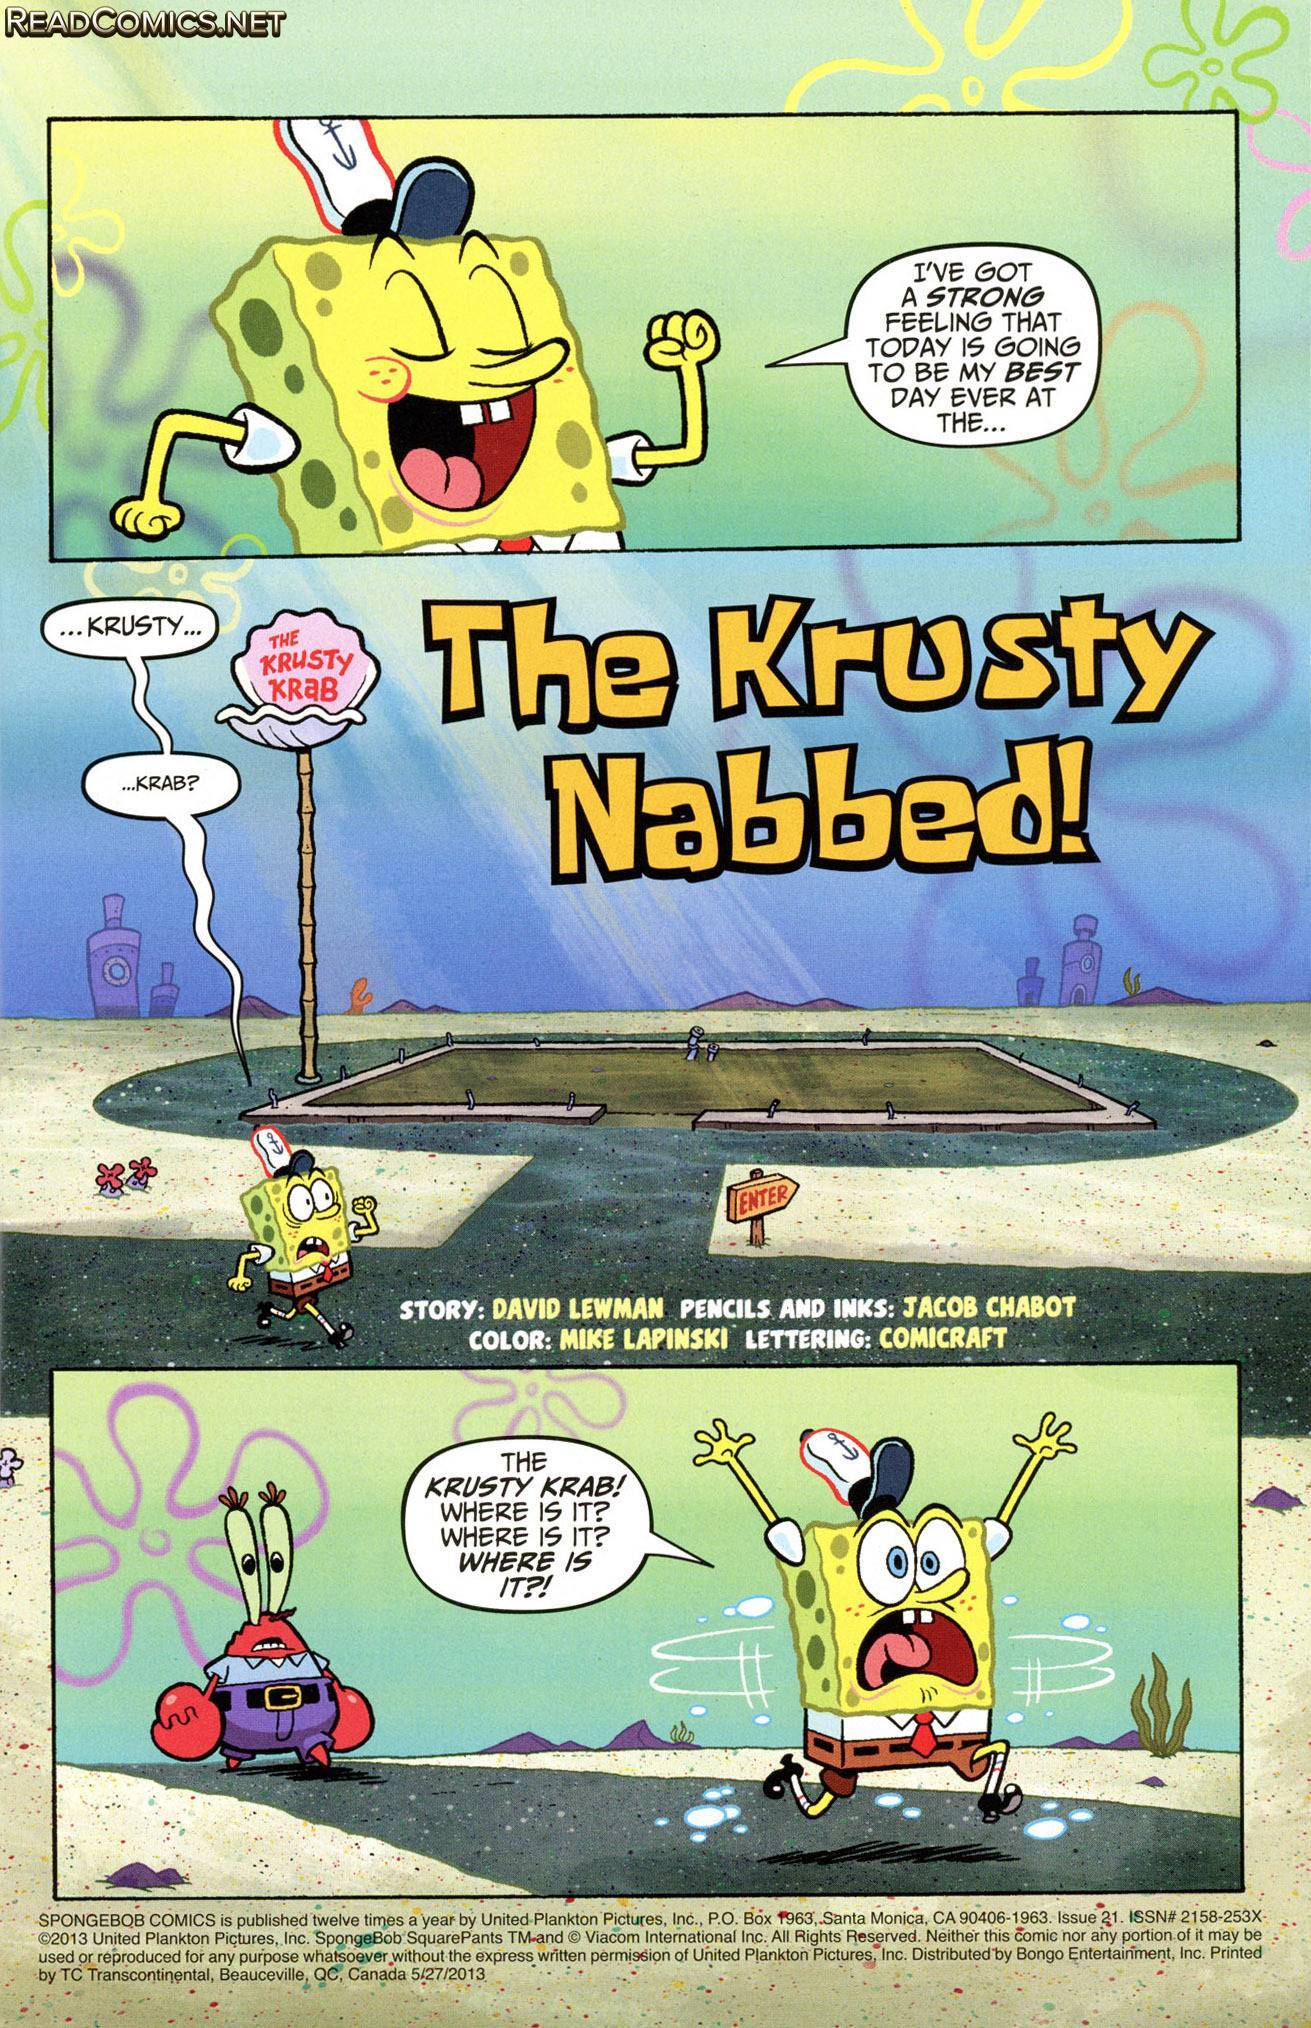 SpongeBob Comics (2011-): Chapter 21 - Page 3